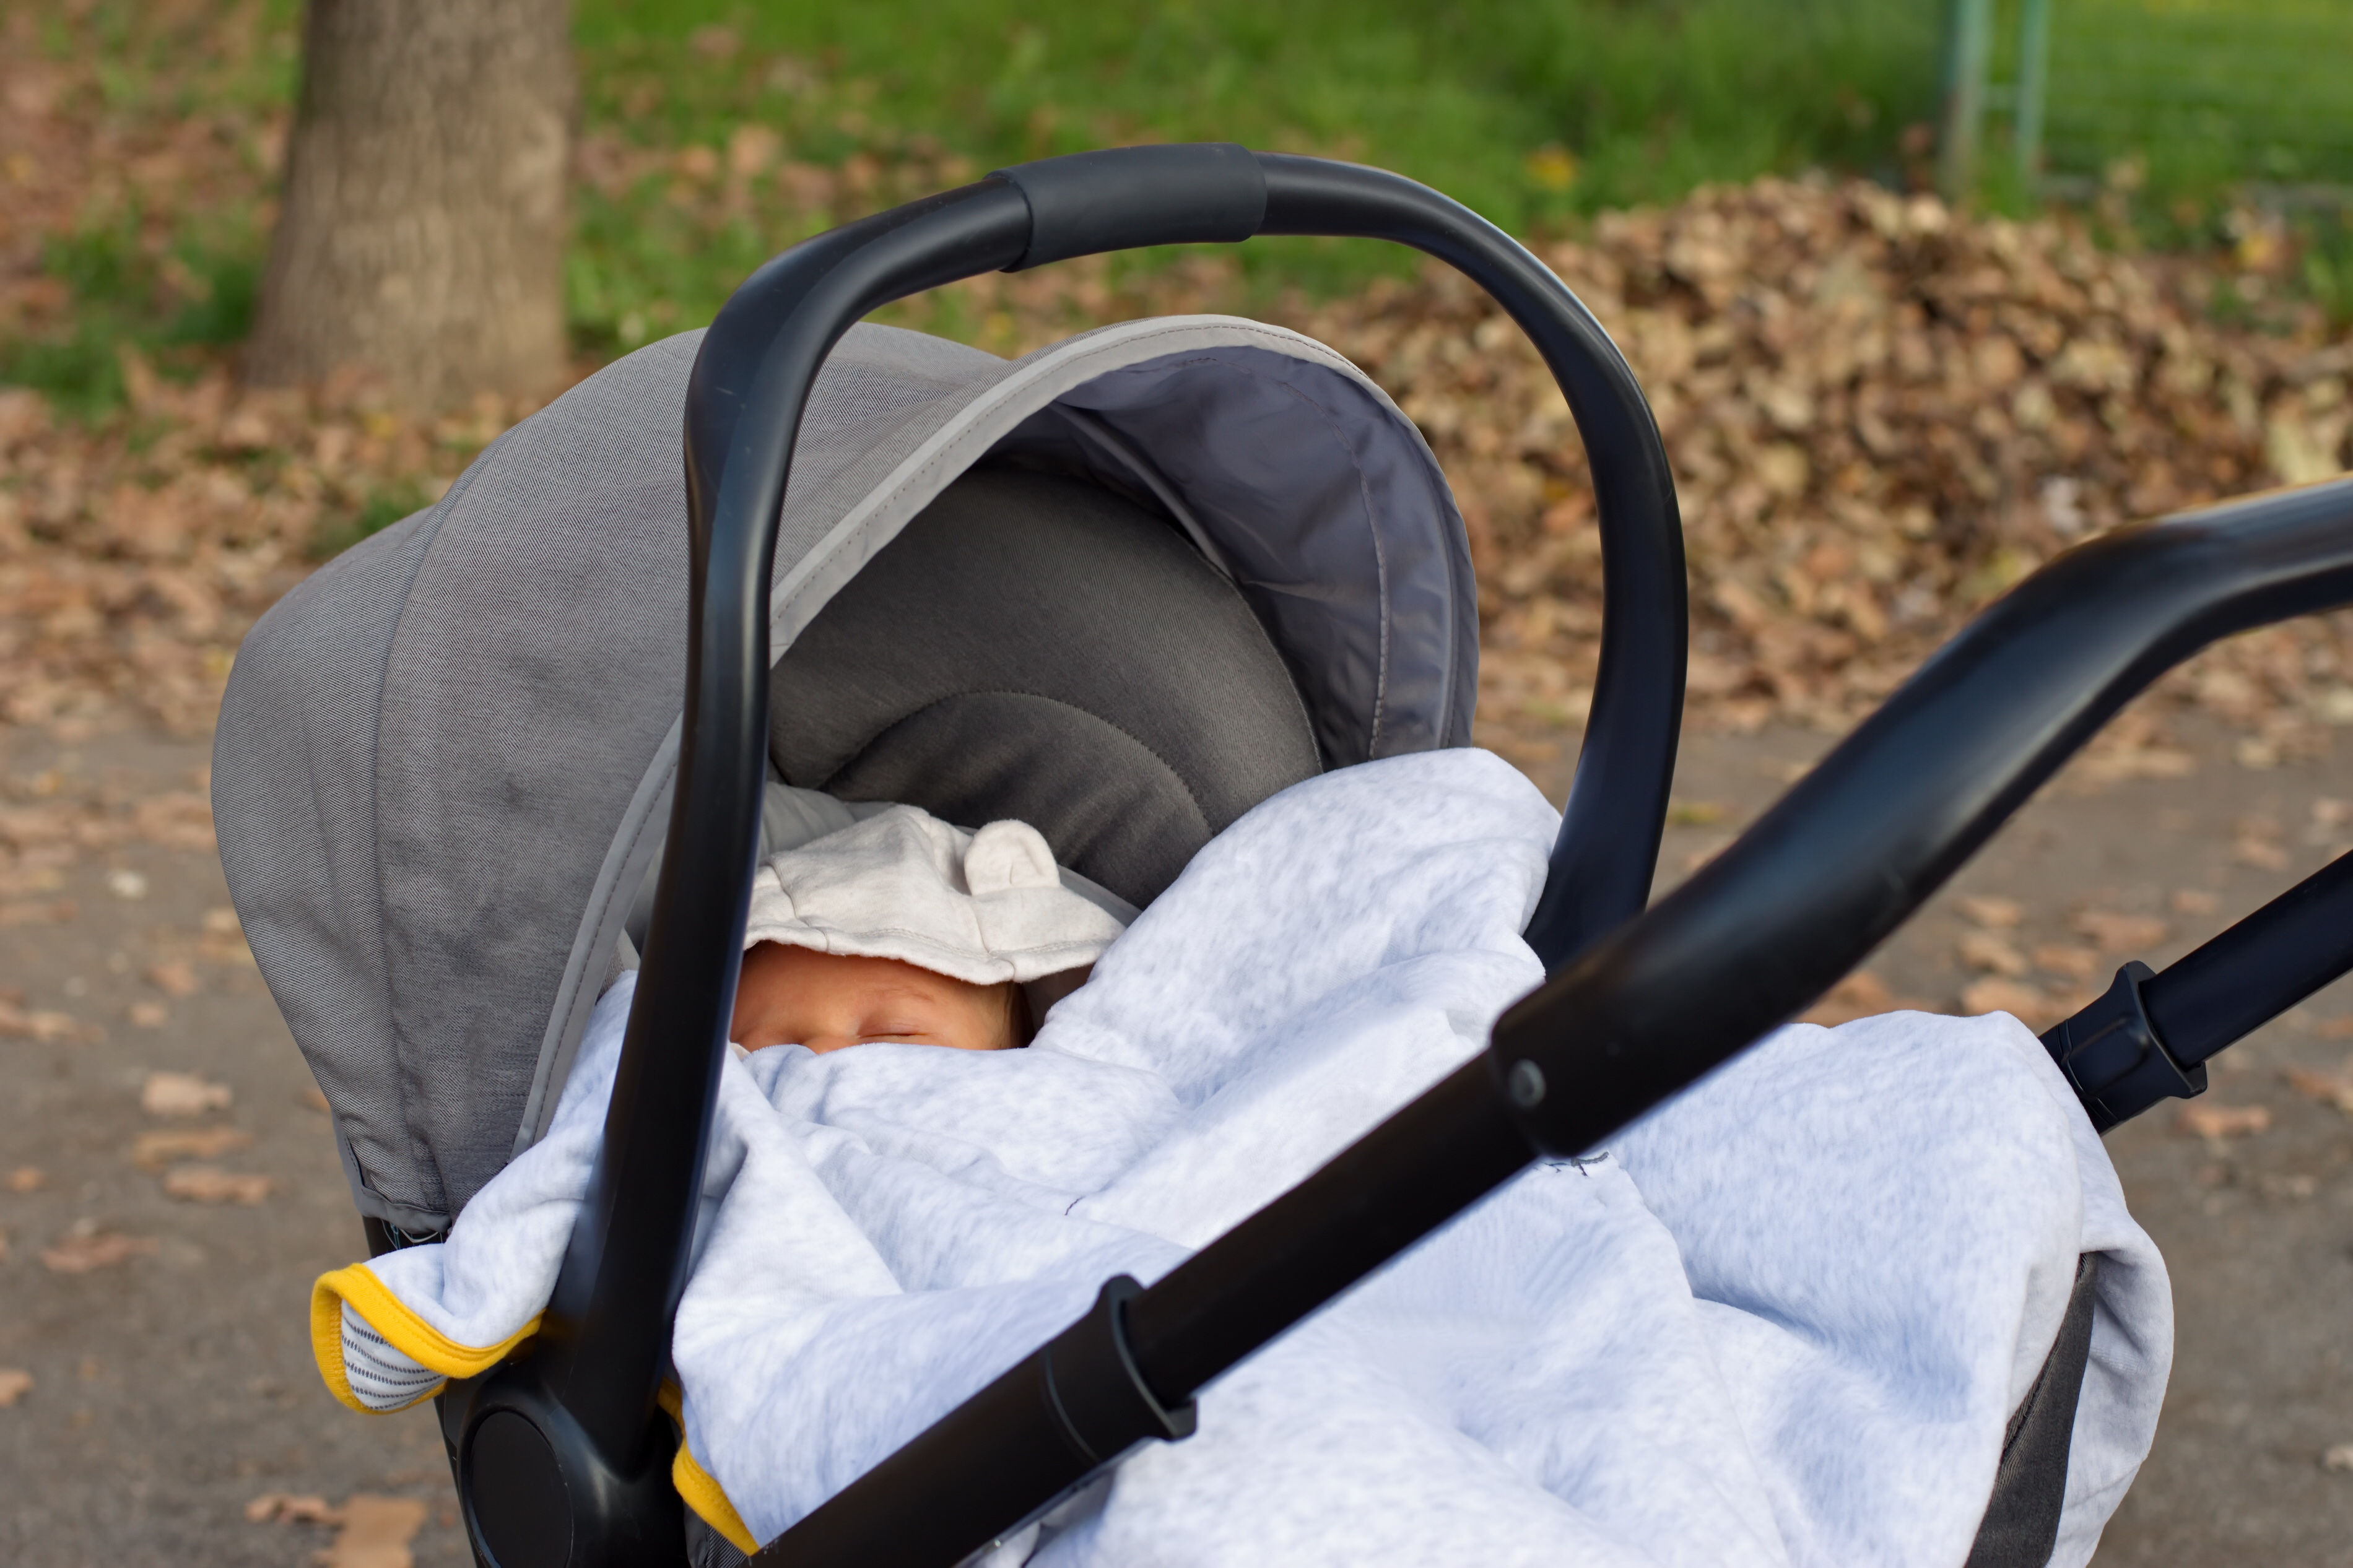 A baby sleeping in a stroller | Source: Shutterstock